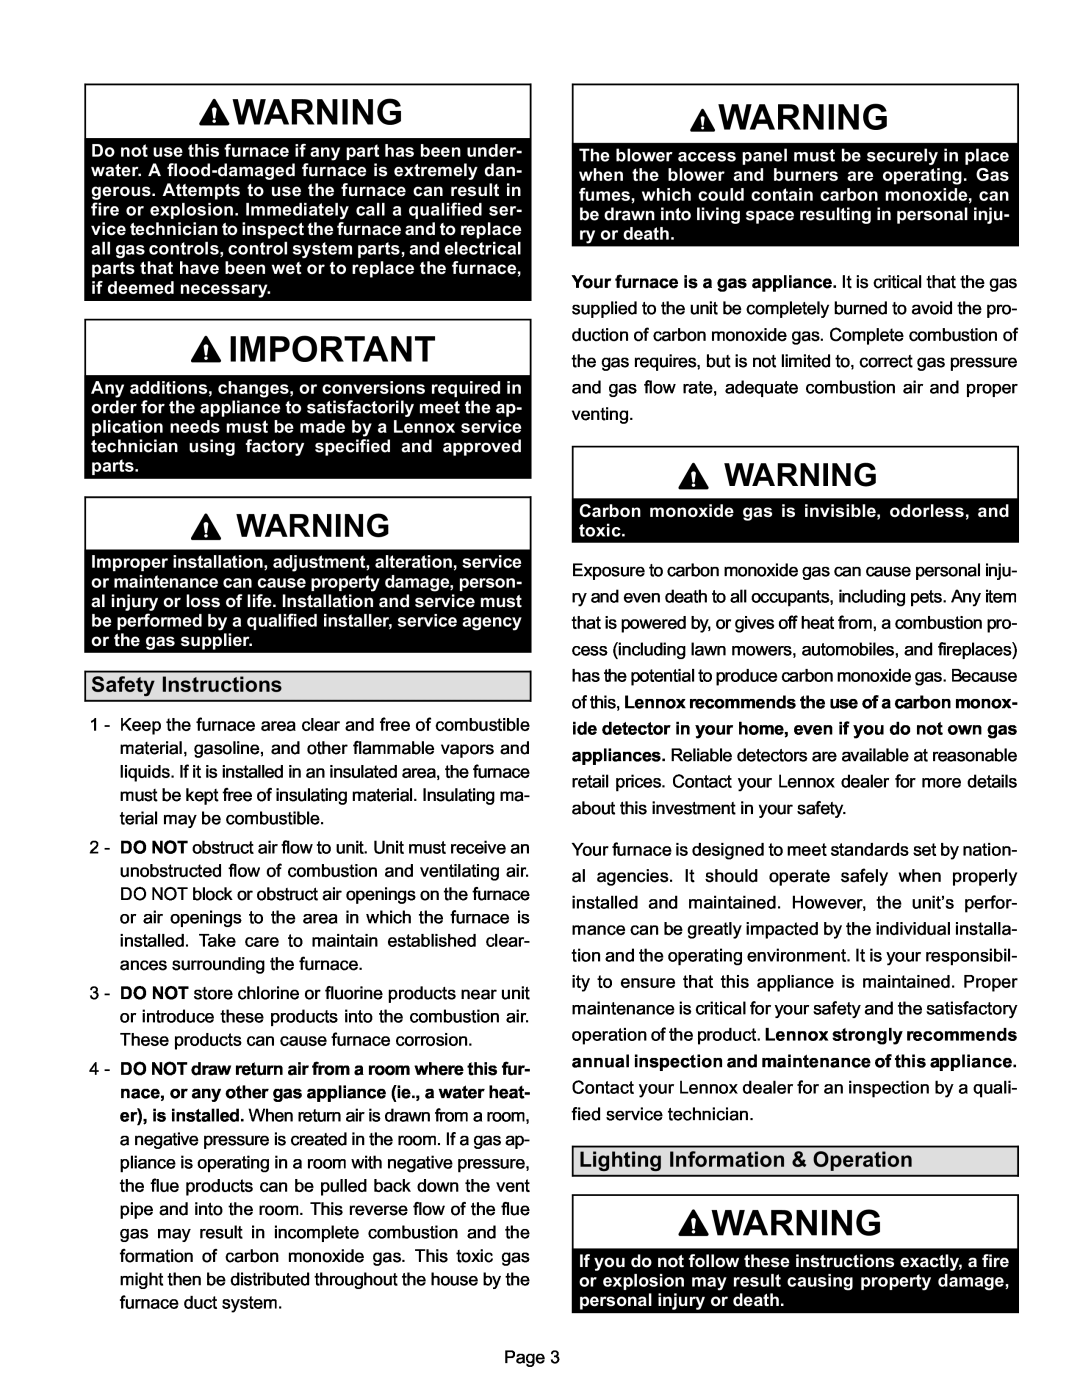 Lennox International Inc G60UH(X) Series manual Safety Instructions, Lighting Information & Operation 